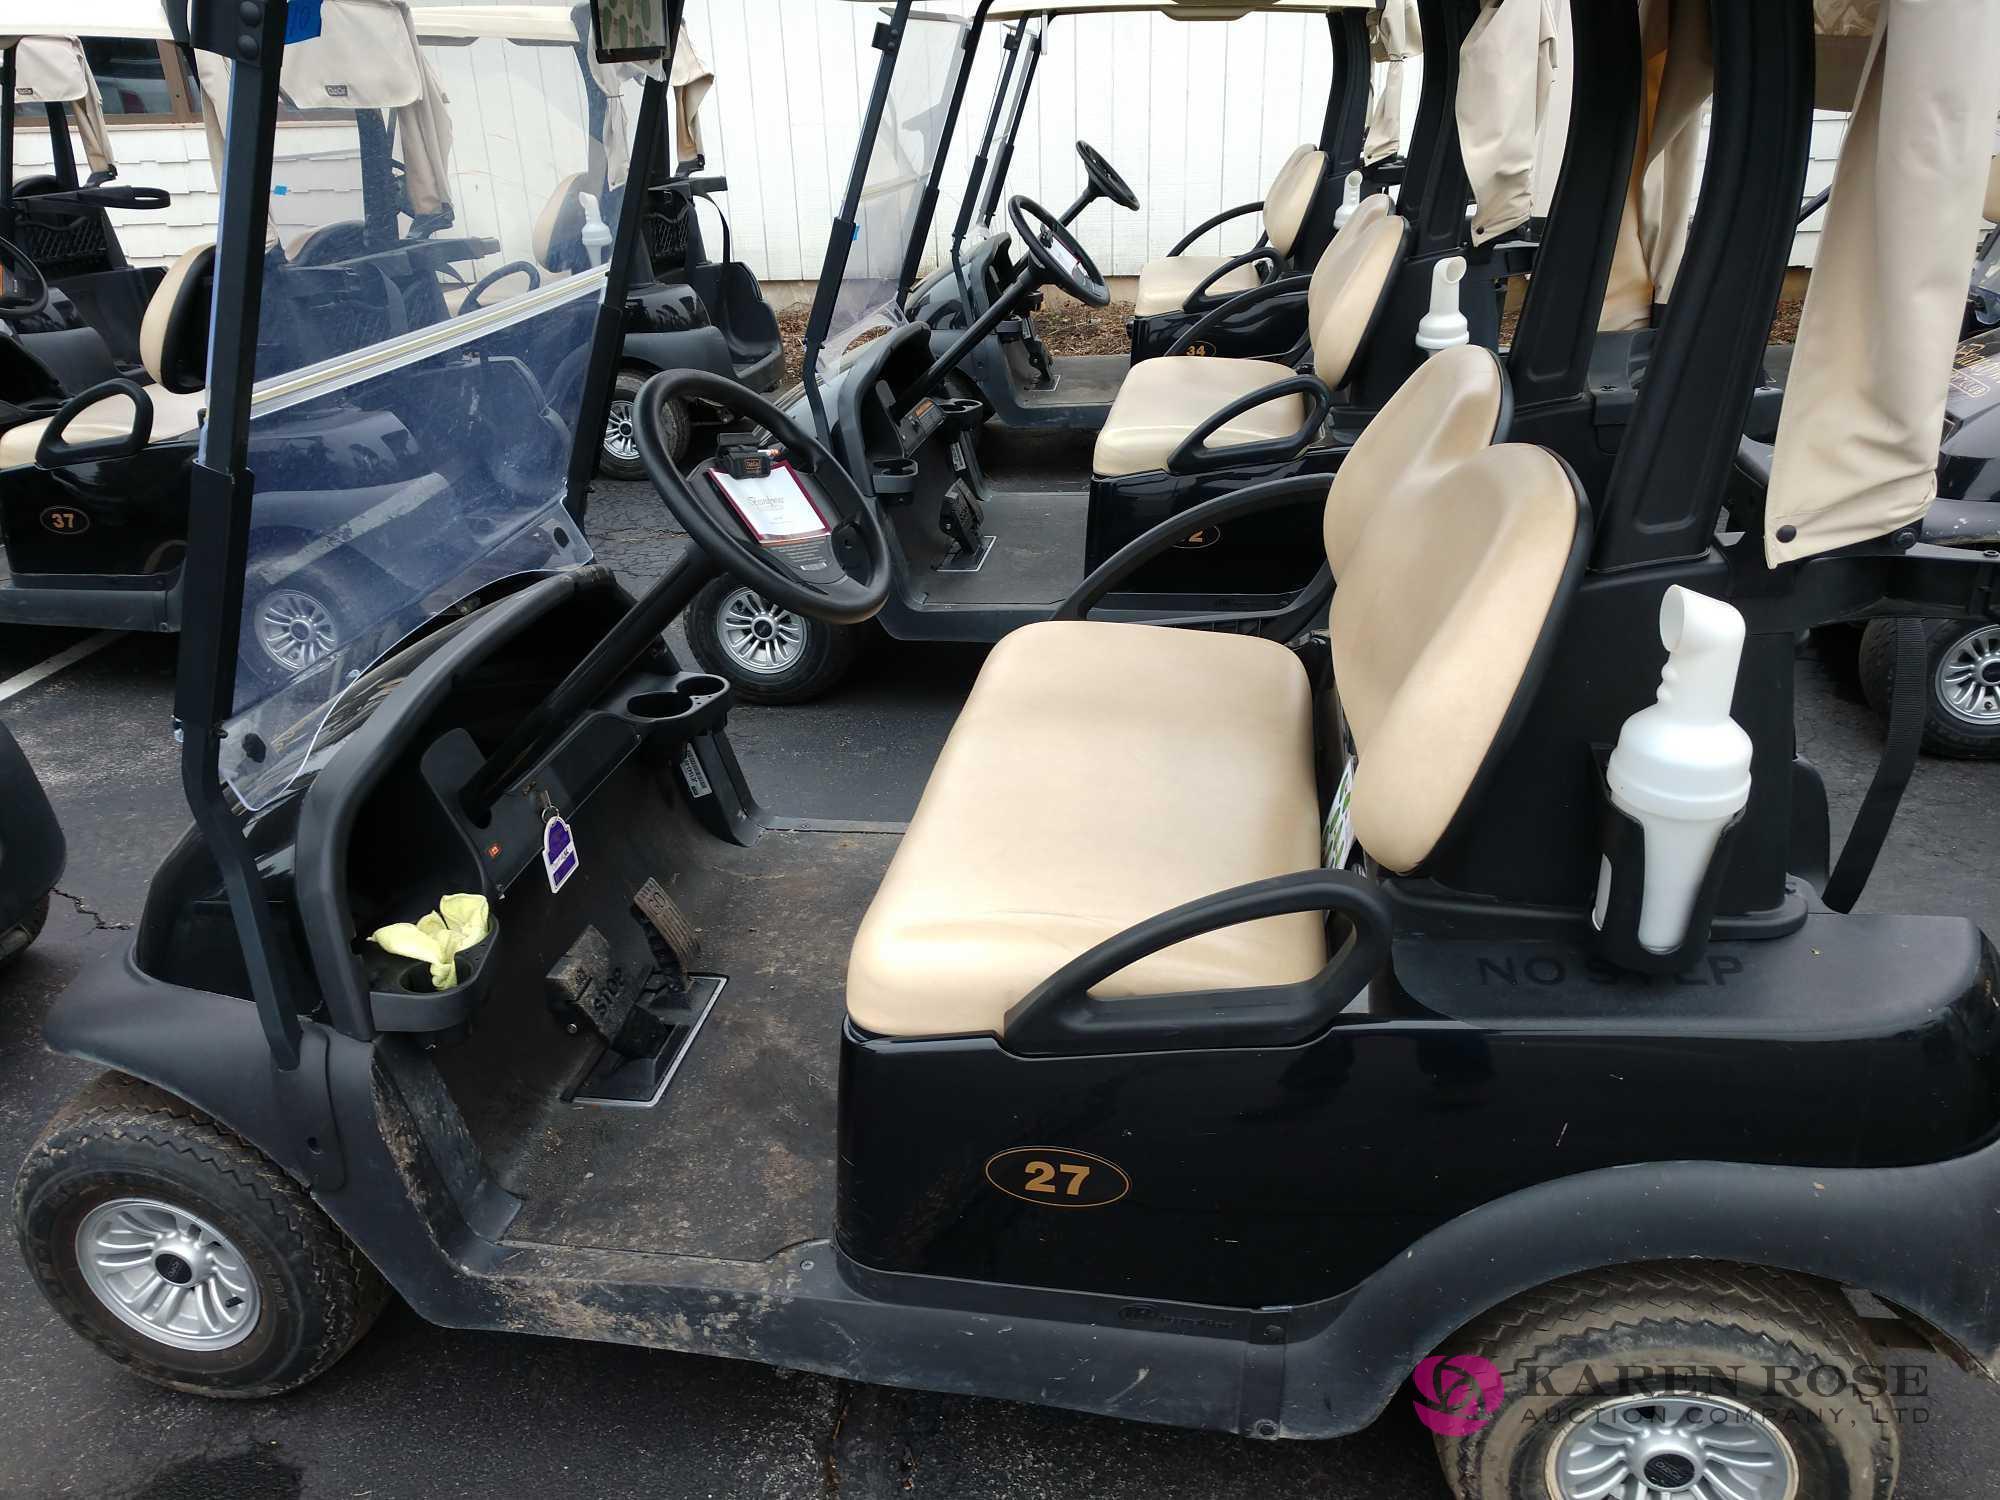 2016 Club car Electric powered golf cart